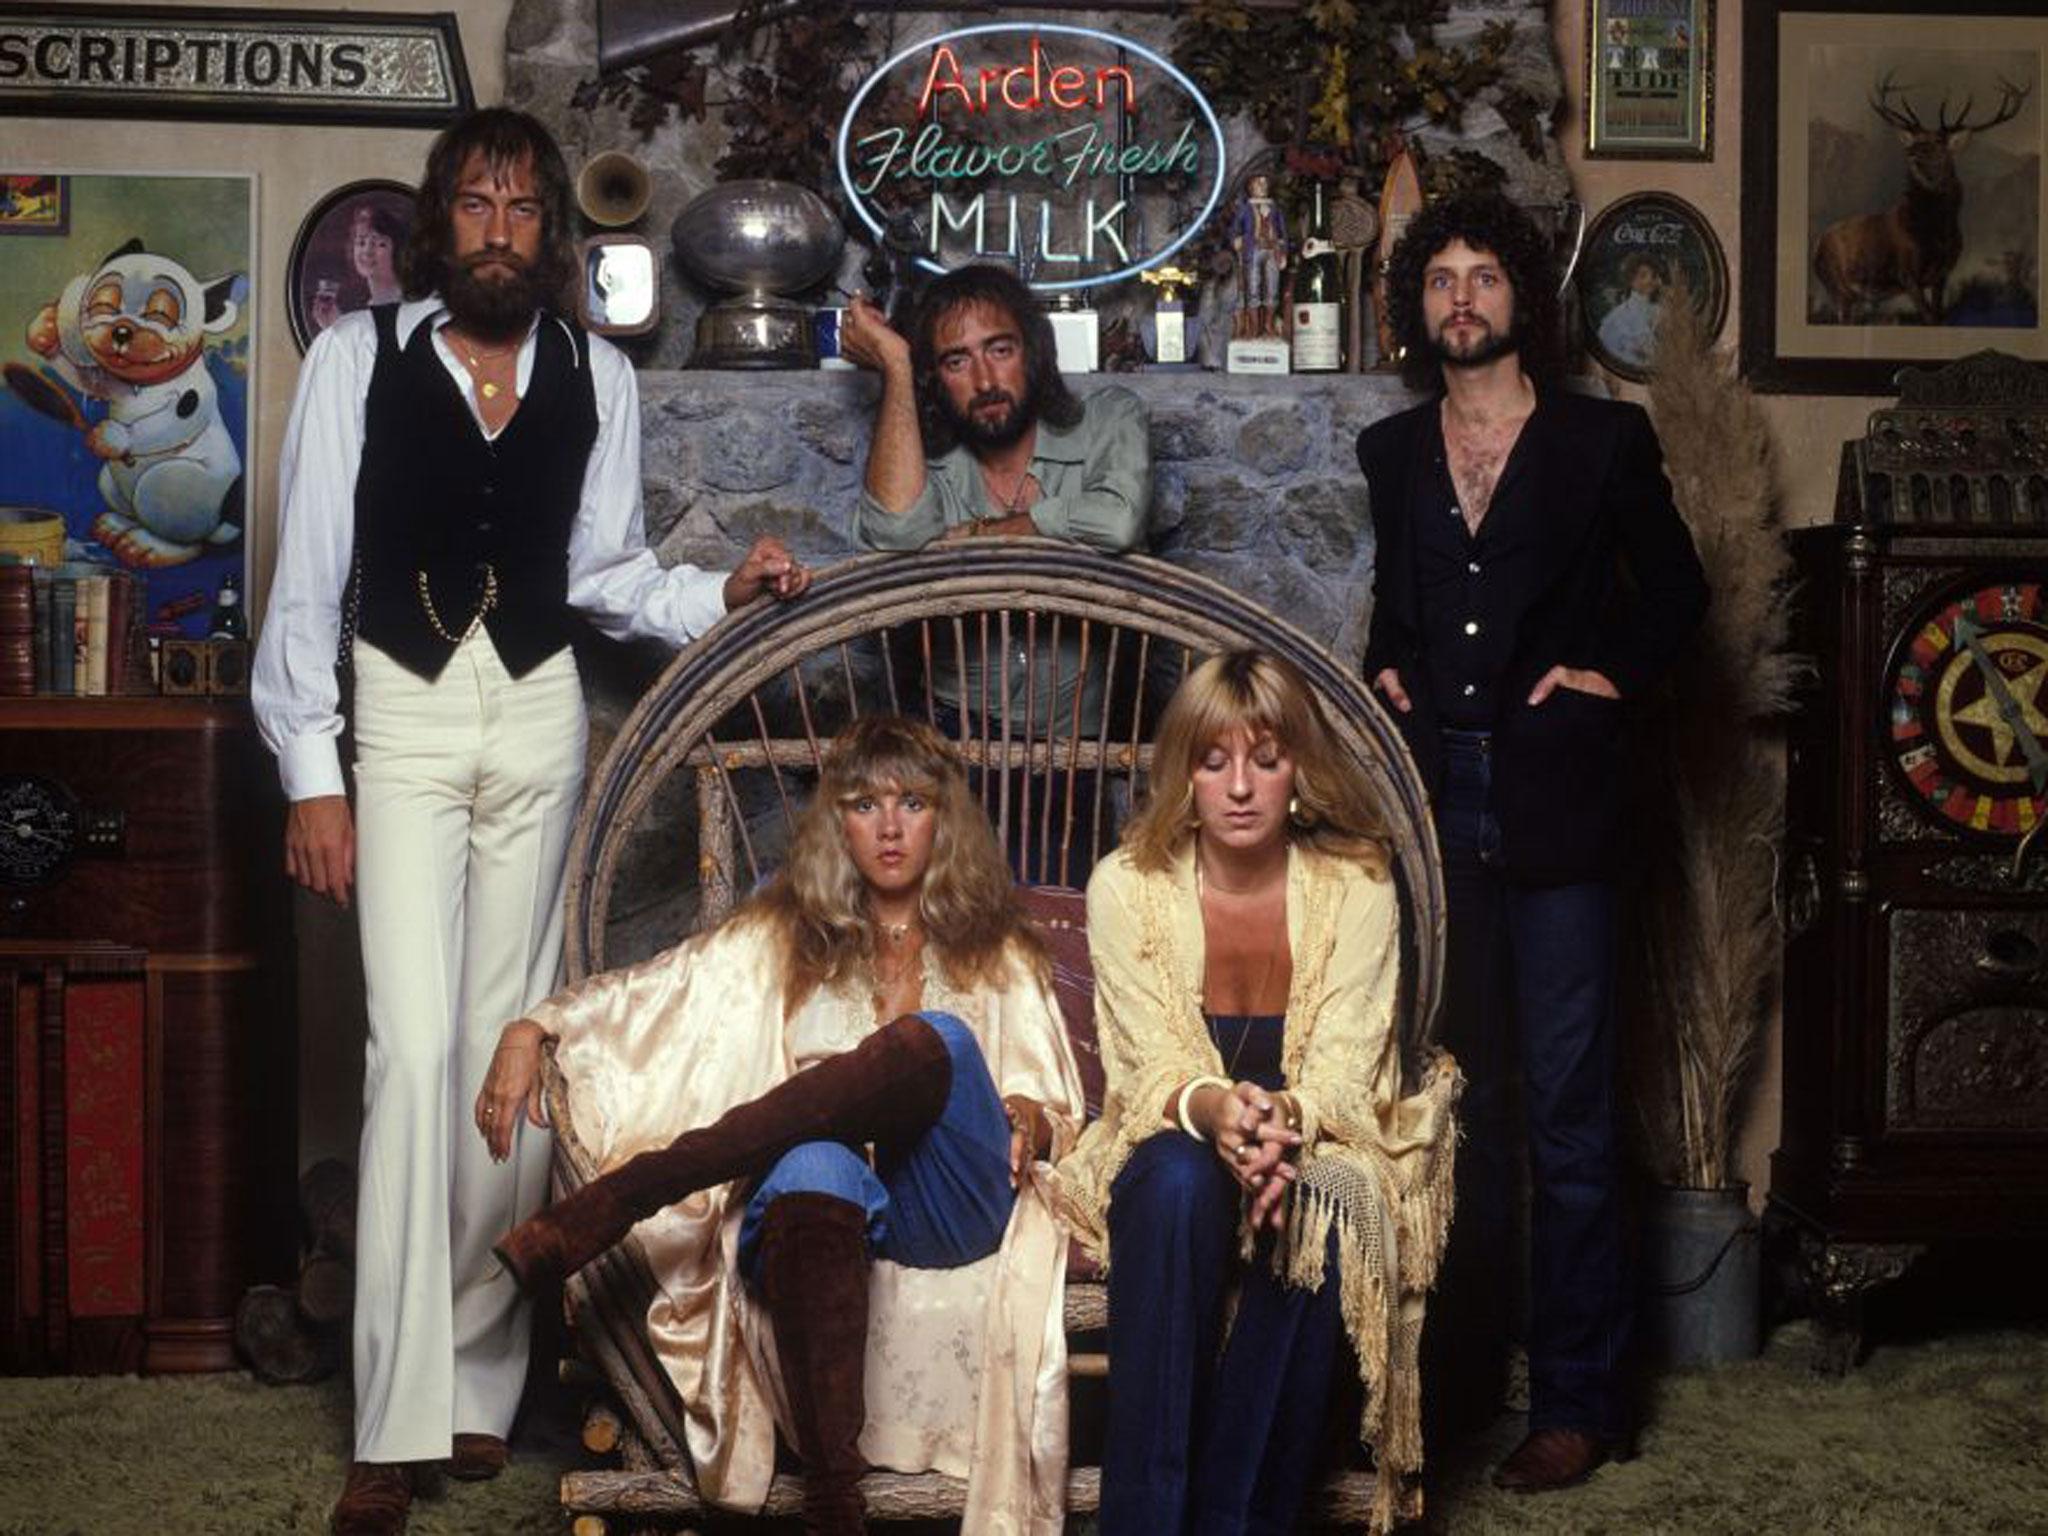 Fleetwood Mac's line-up back in 1975